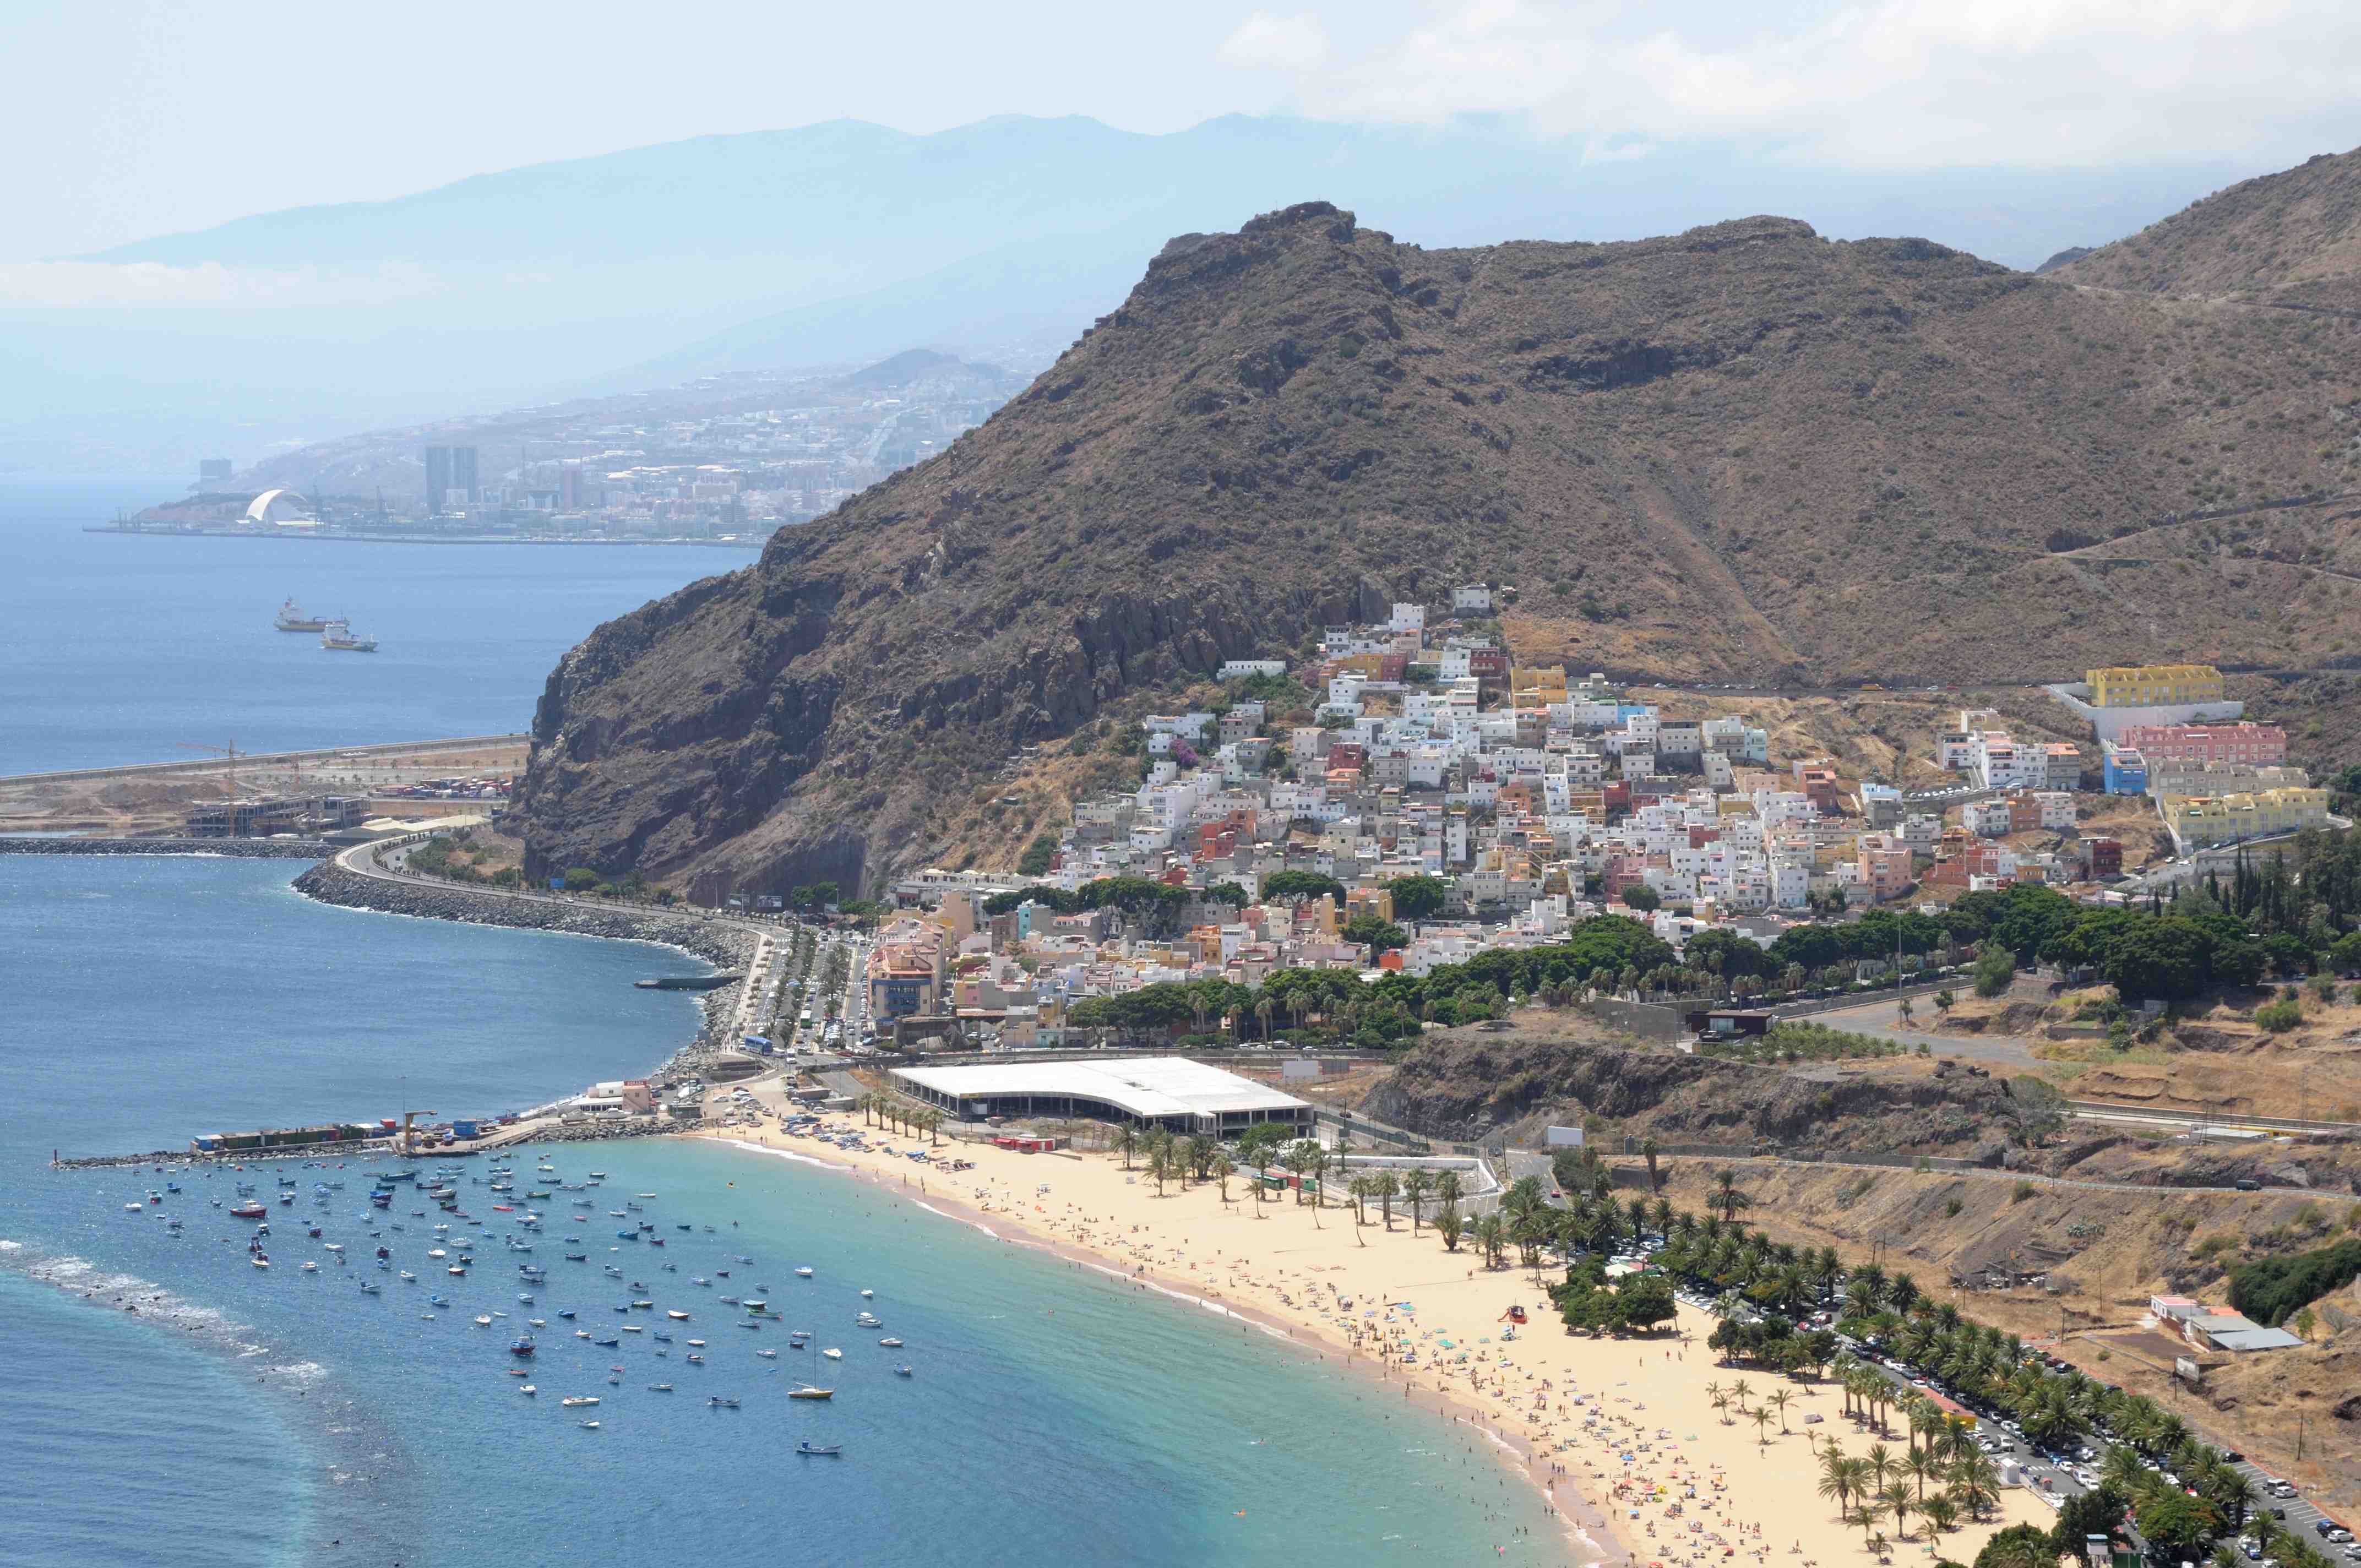 Playa de Las Teresitas and San Andres, Canary Island Tenerife, Spain